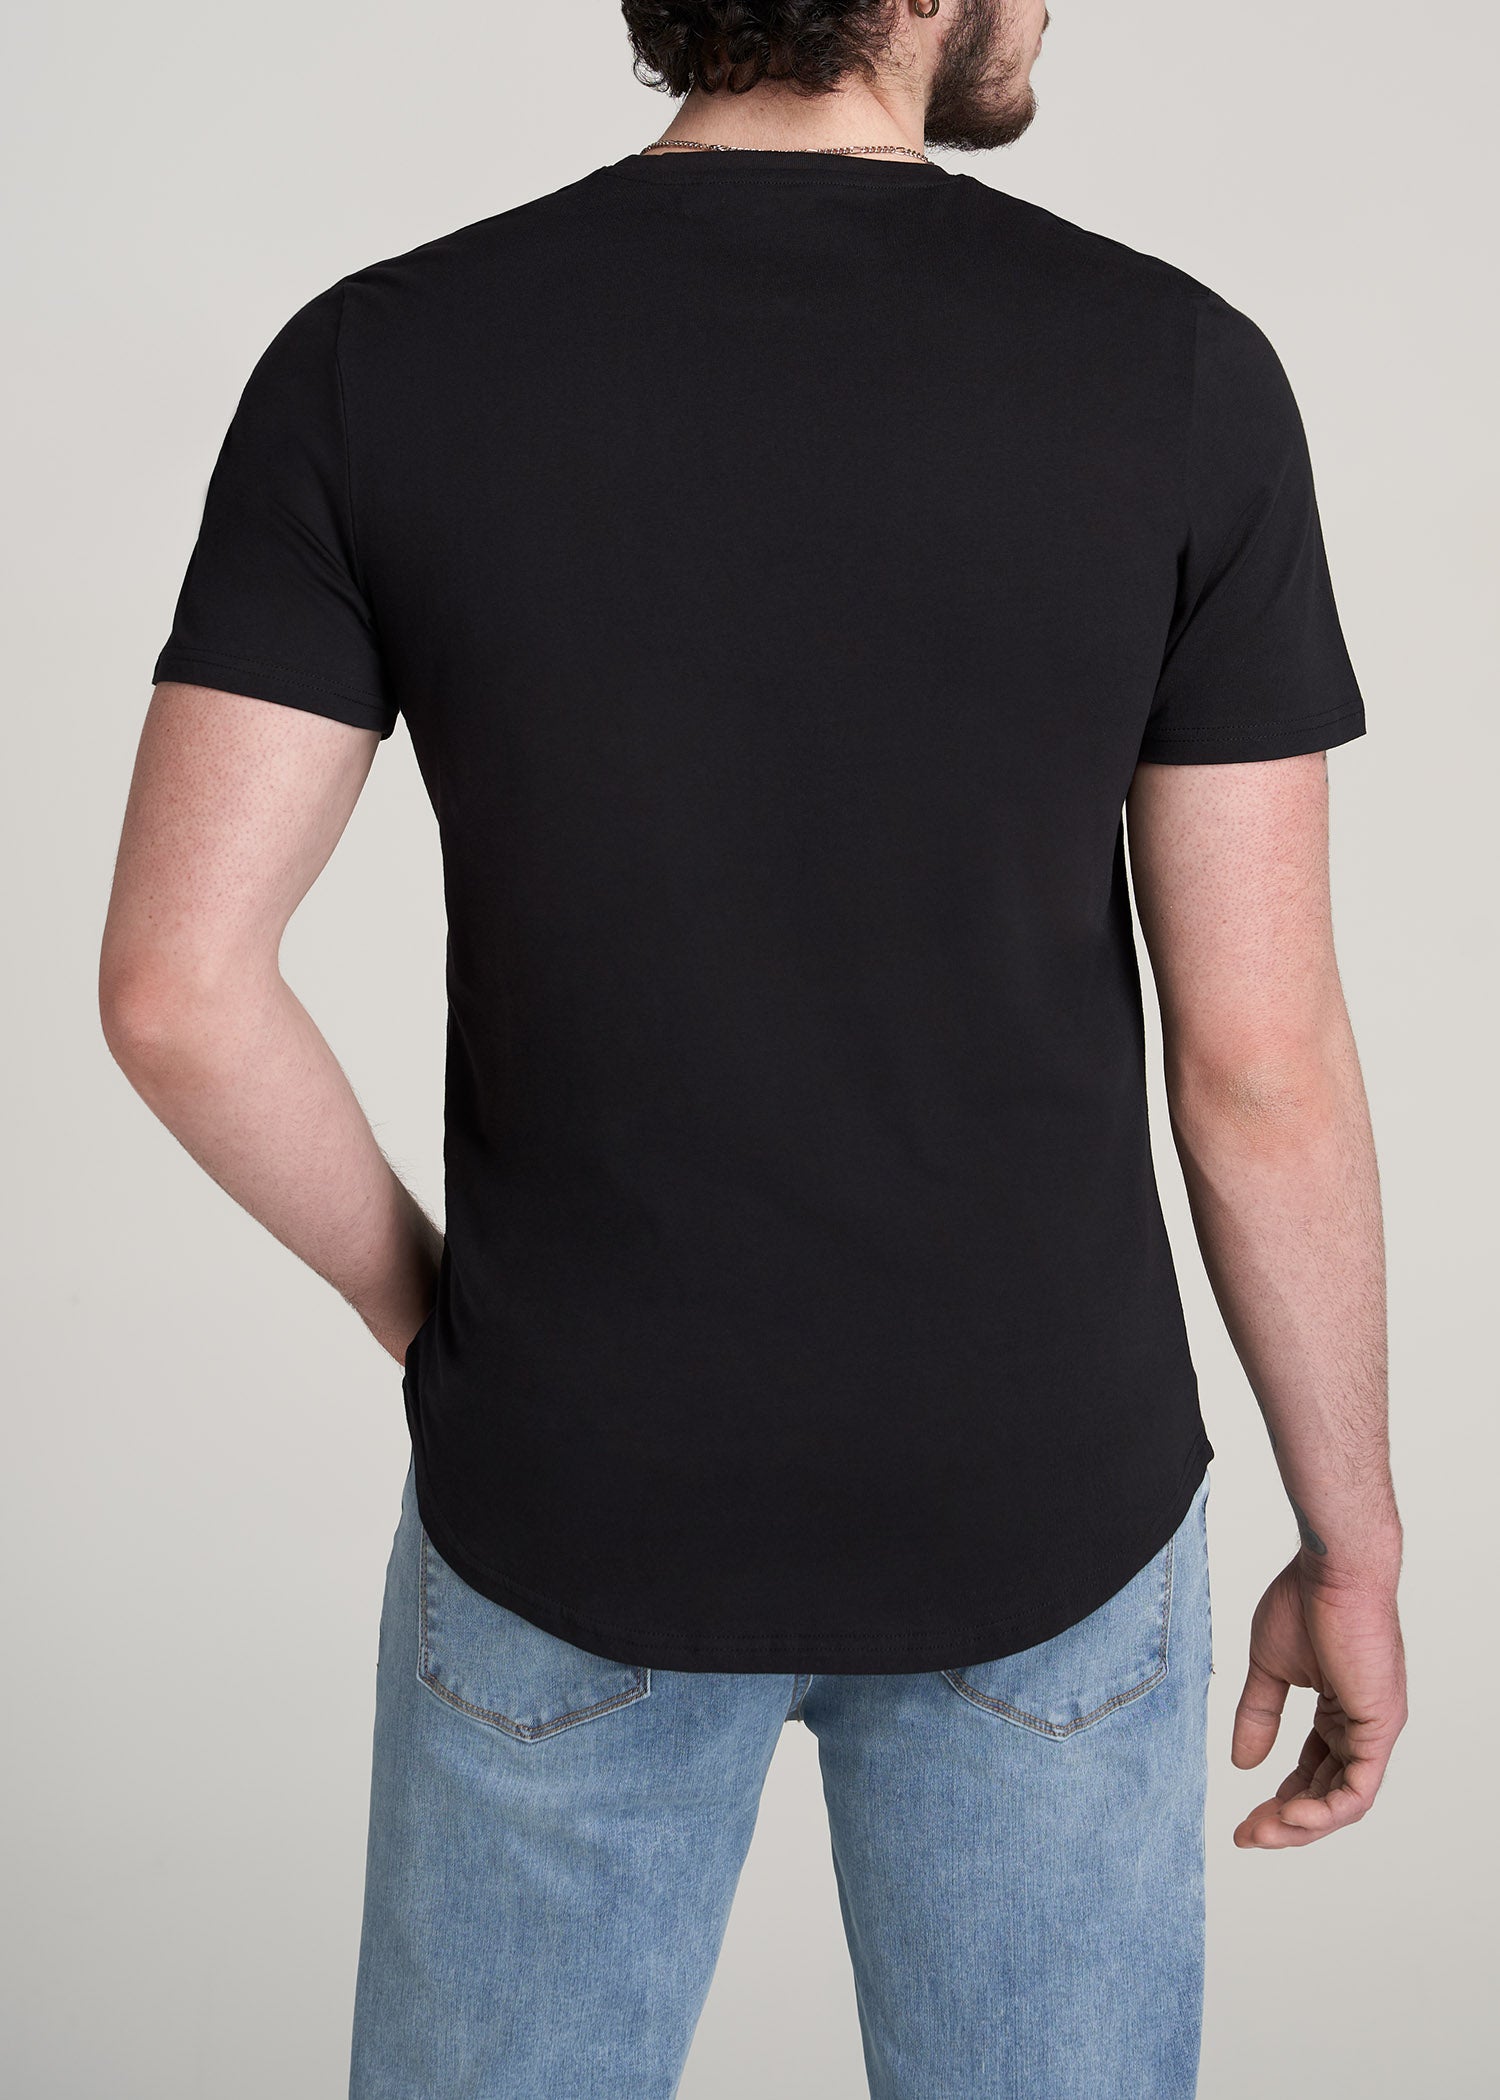 Føde Hassy Alarmerende Scoop Neck T-shirts Mens: Men's Tall Bottom Black Tees | American Tall